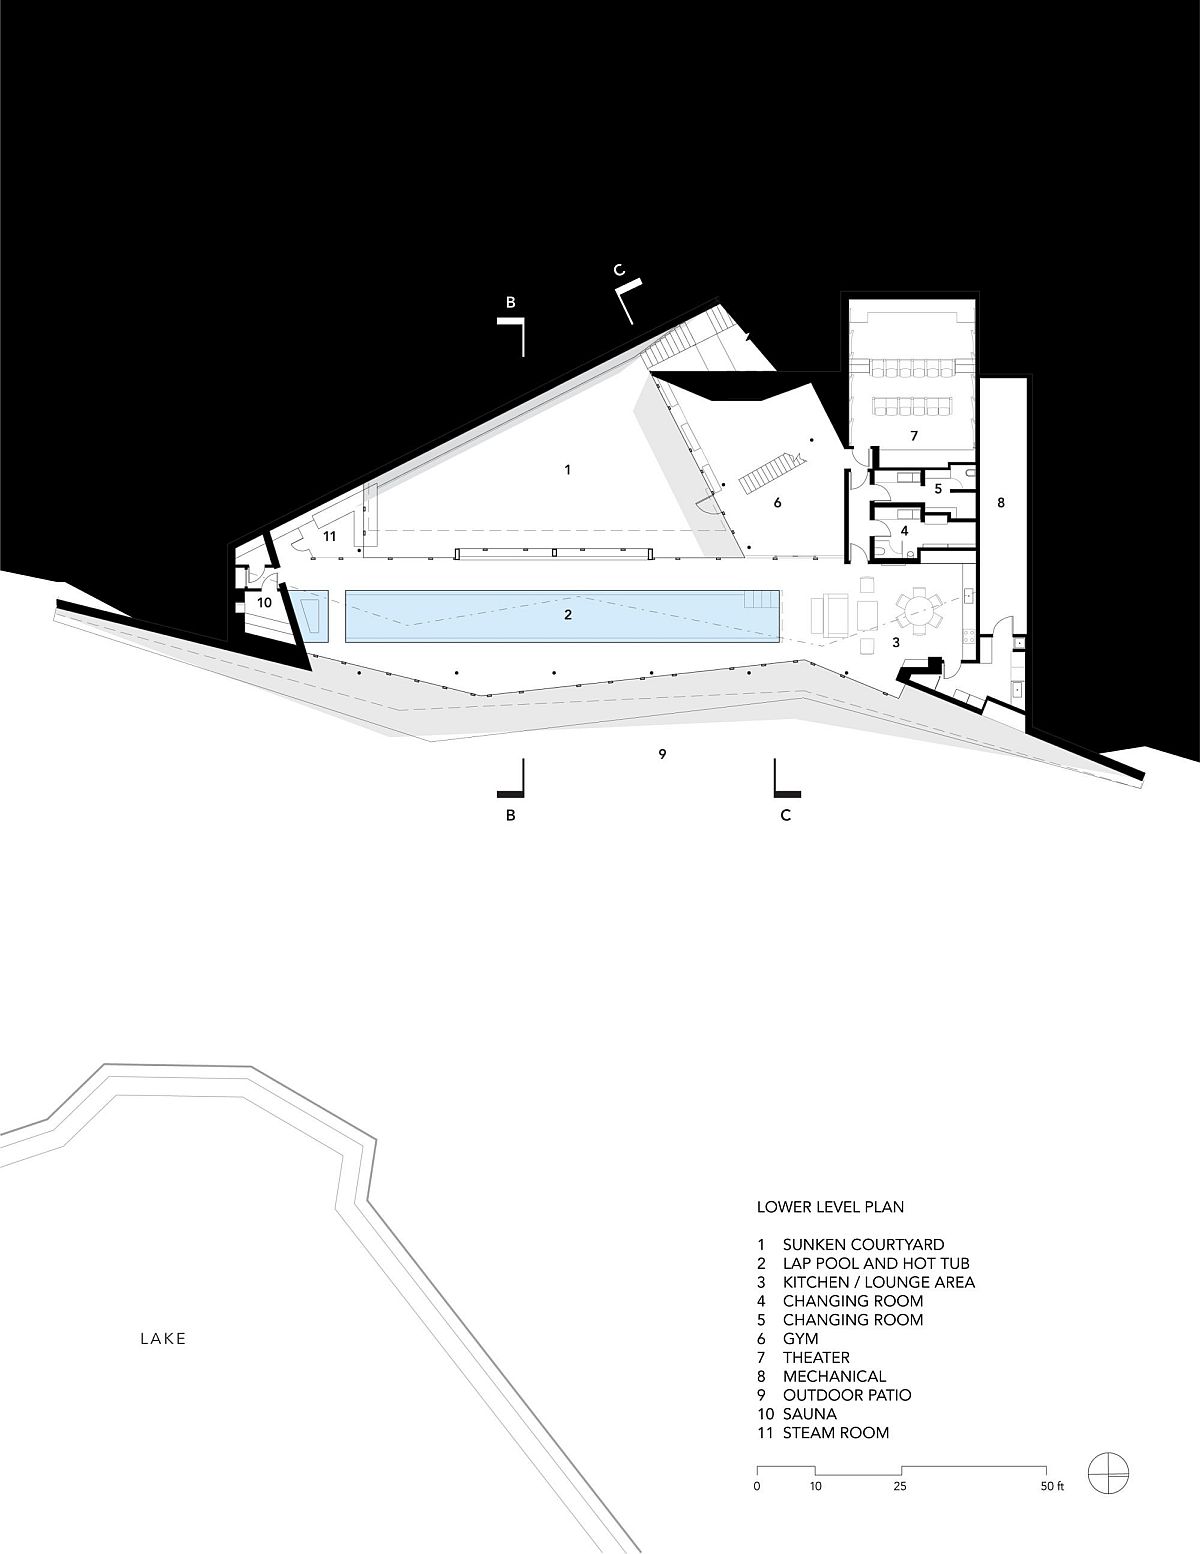 Design plan of the Pool Pavilion in Adirondack Mountains